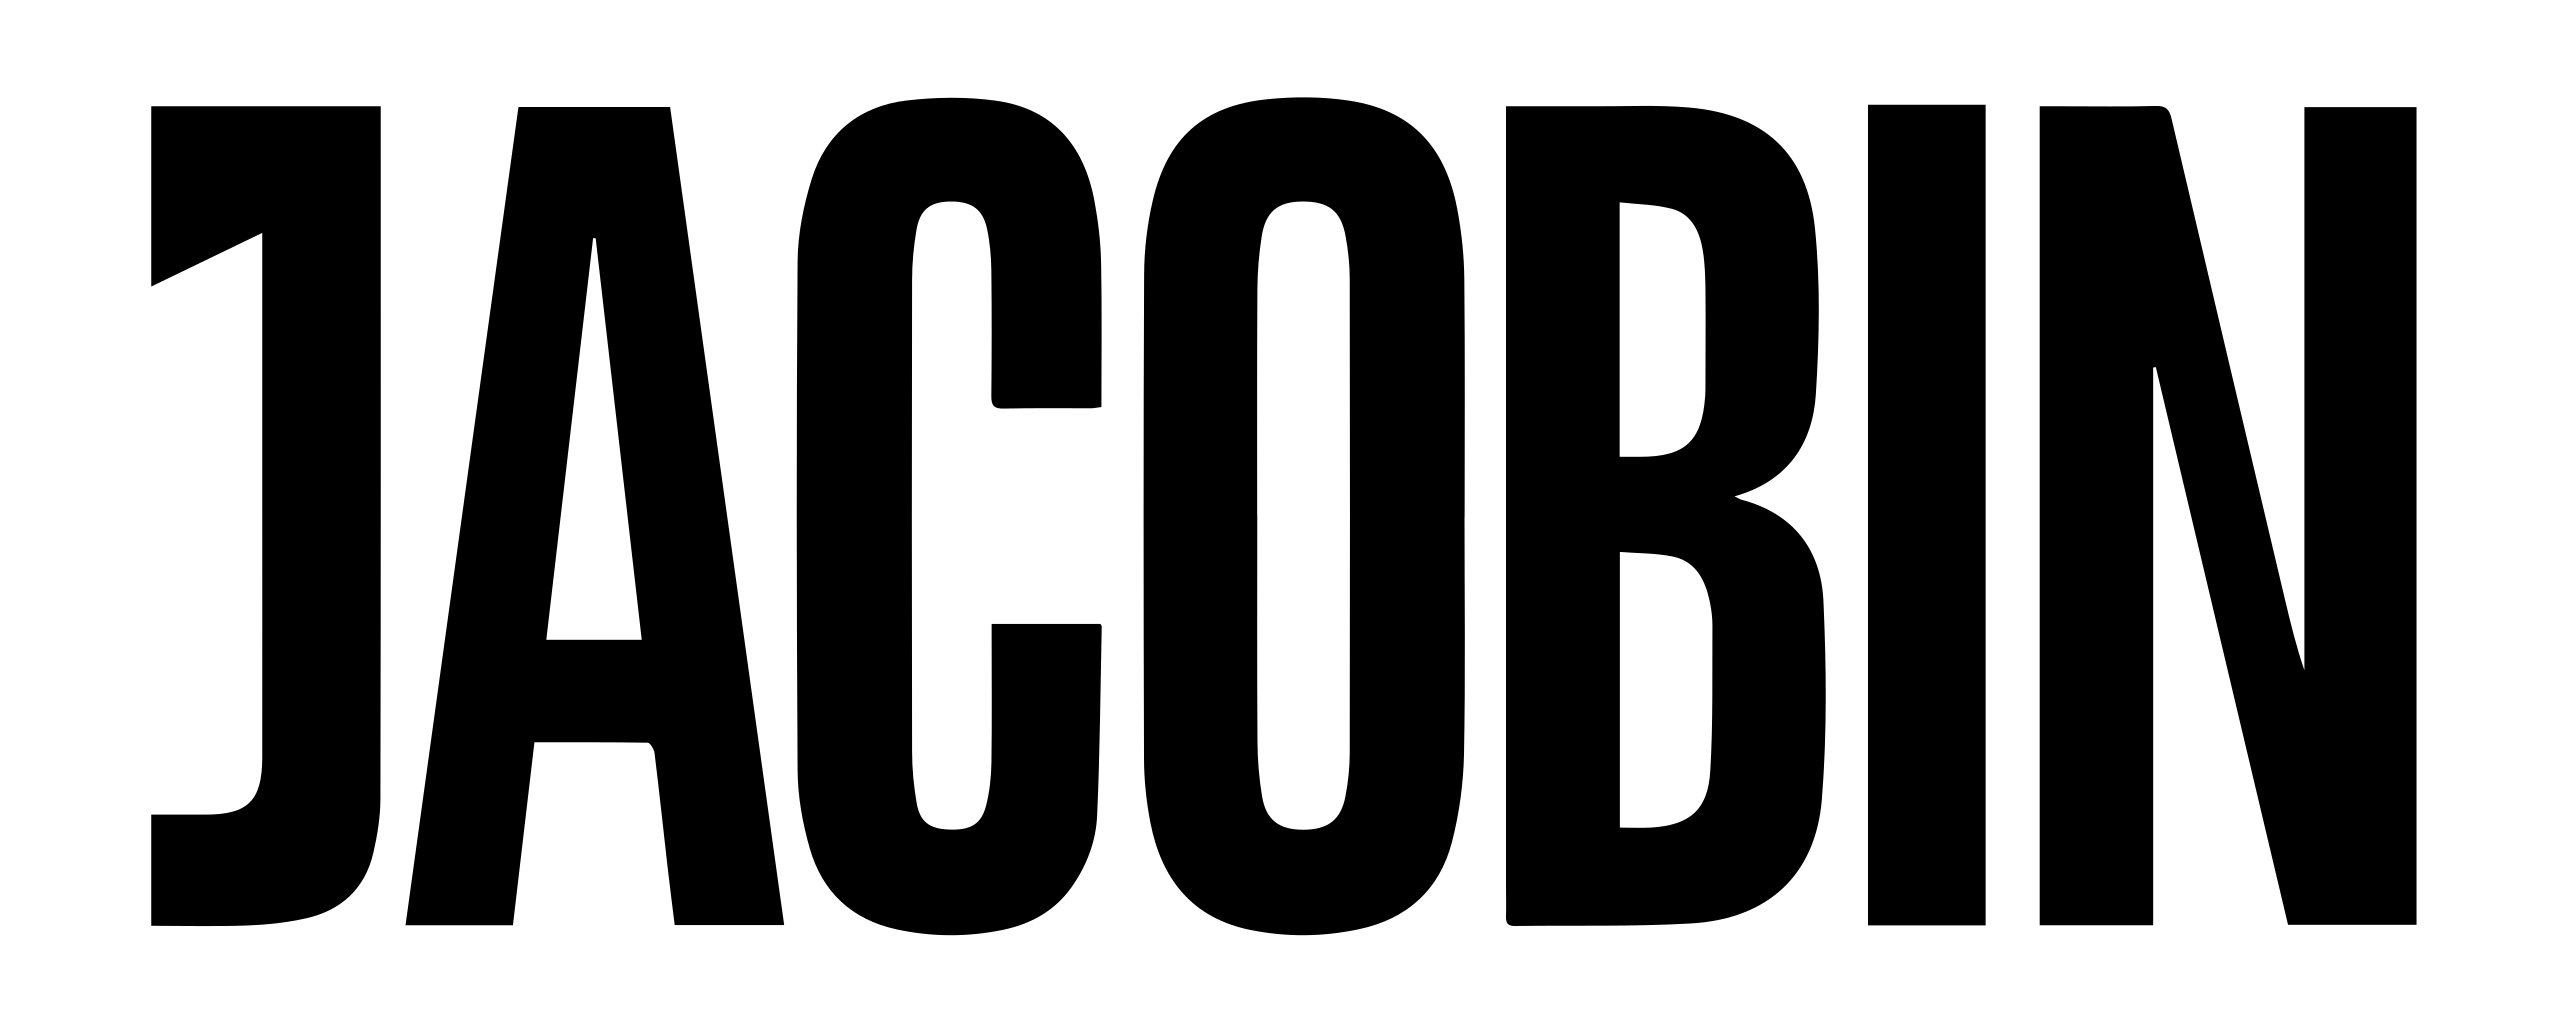 Jacobin logo.png